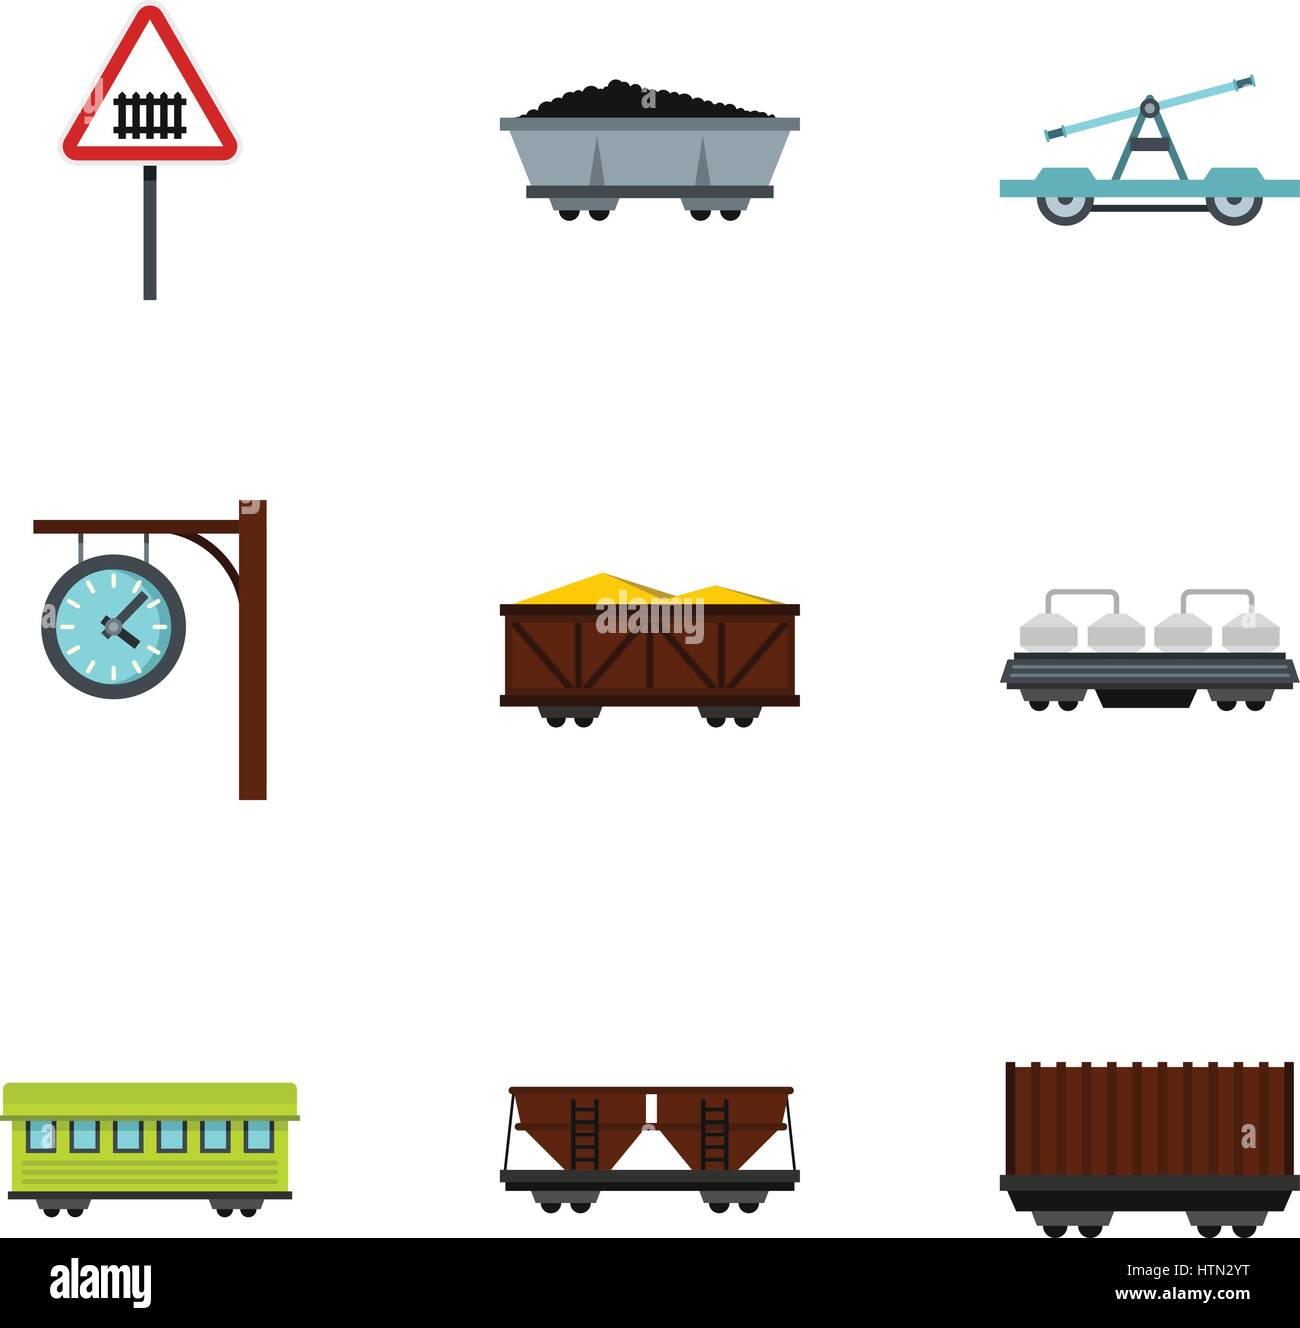 Zug, Eisenbahn, u-Bahn Icons Set. Flache Darstellung von 9 Zug, Eisenbahn, u-Bahn Vektor-Icons für web Stock Vektor